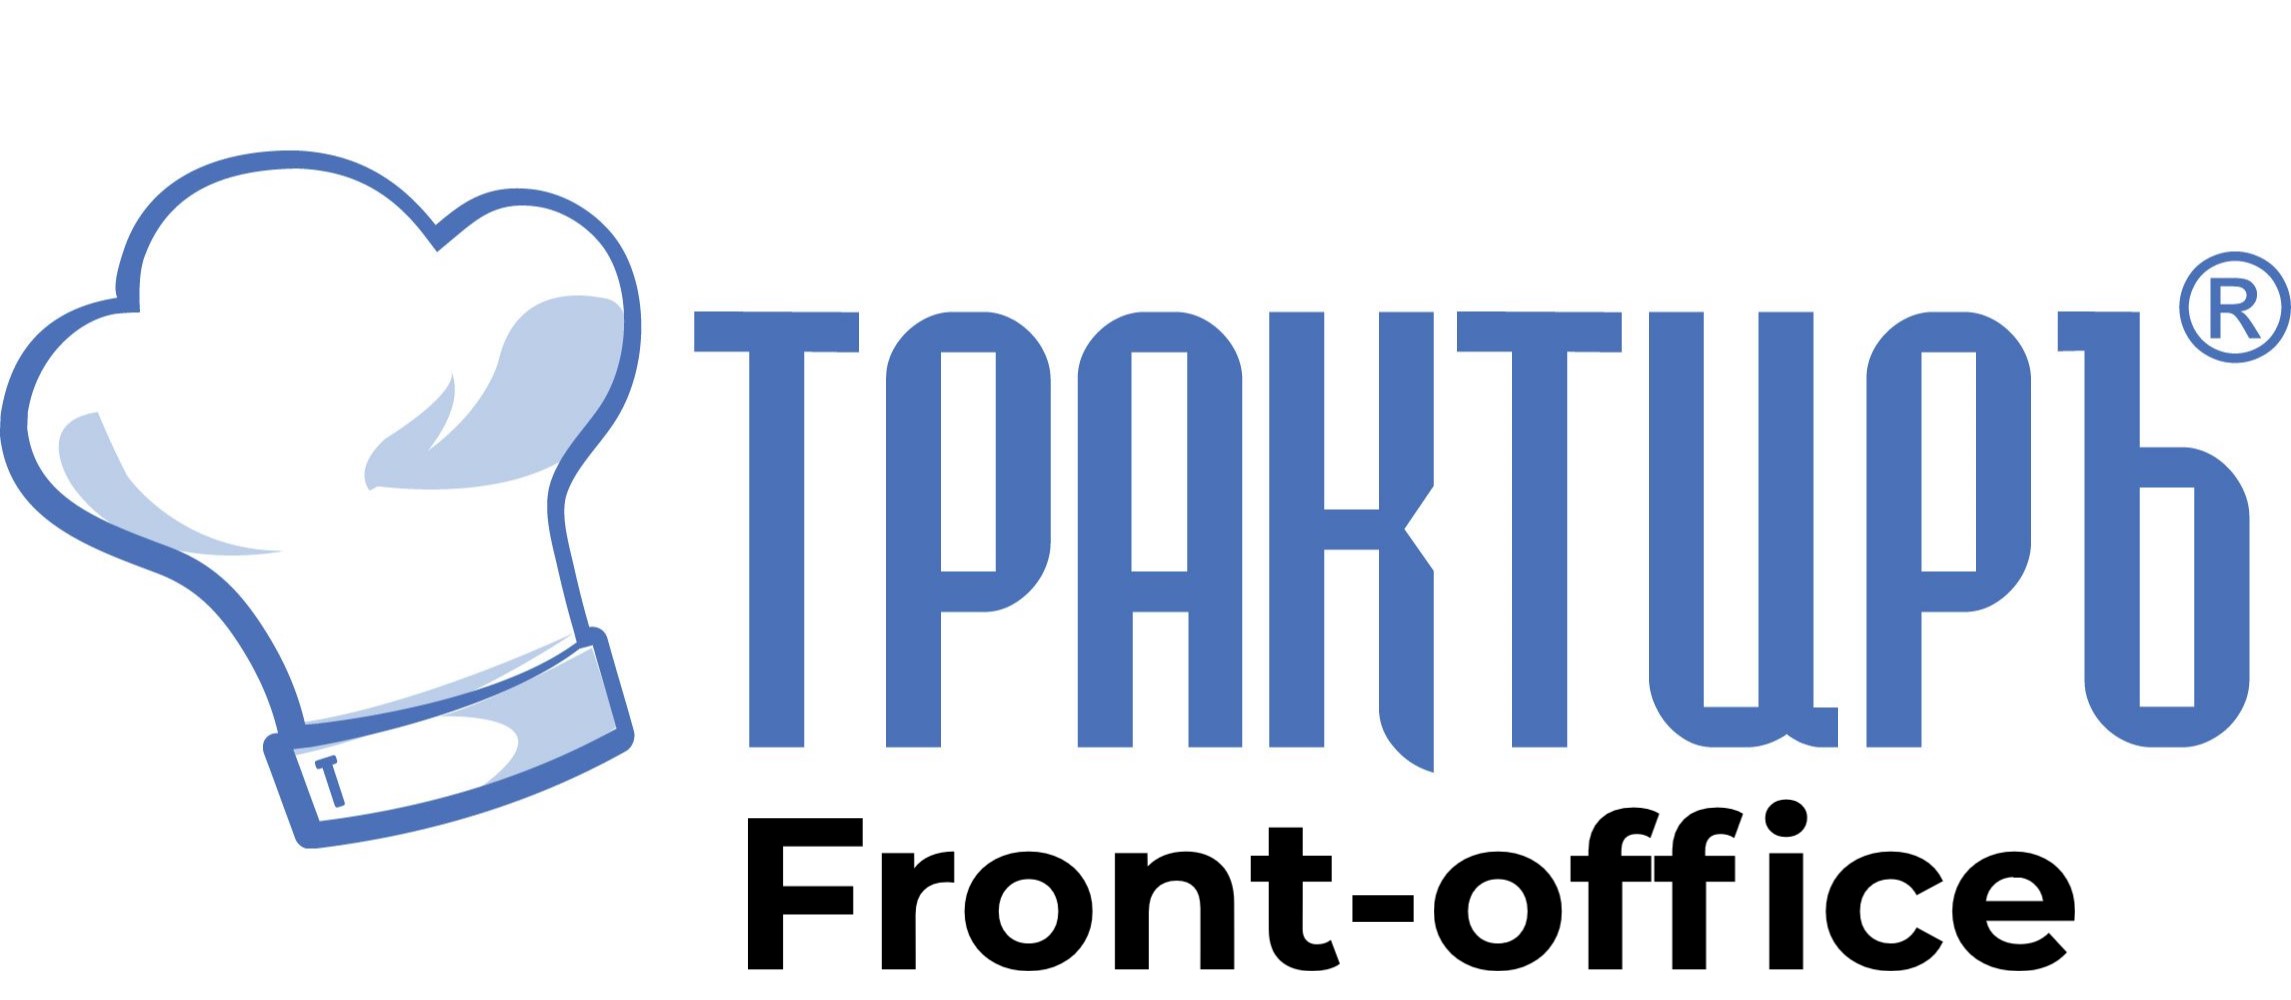 Трактиръ: Front-Office v4.5  Основная поставка в Саранске